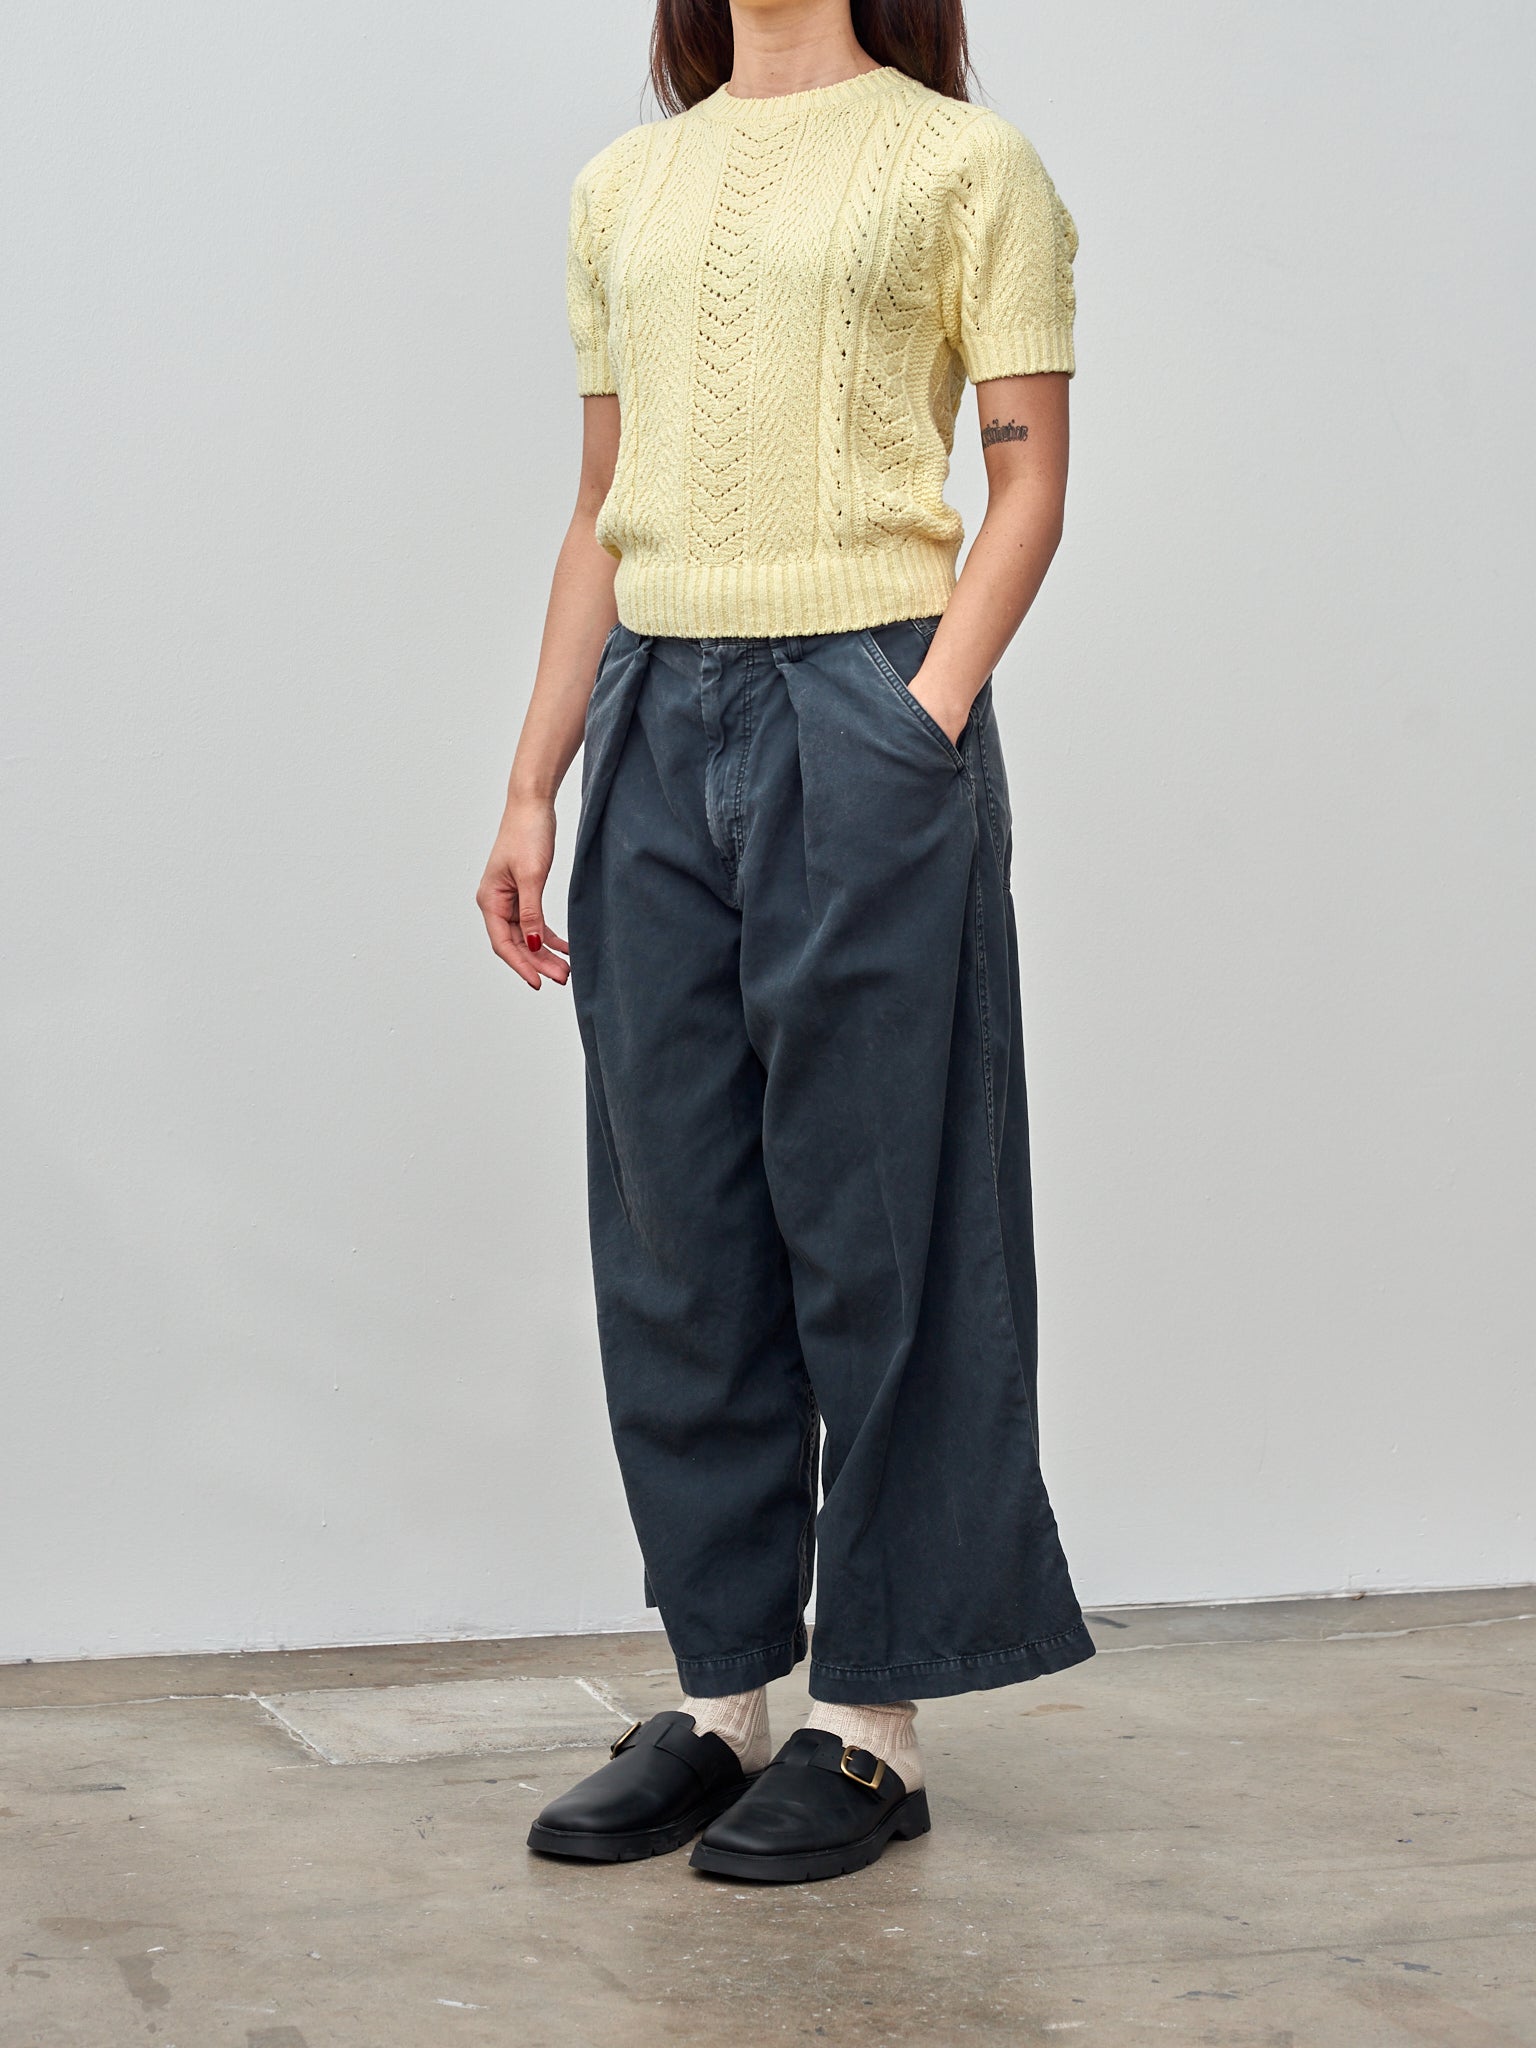 Namu Shop - Unfil Open Work Cable Knit Sweater - Cream Yellow